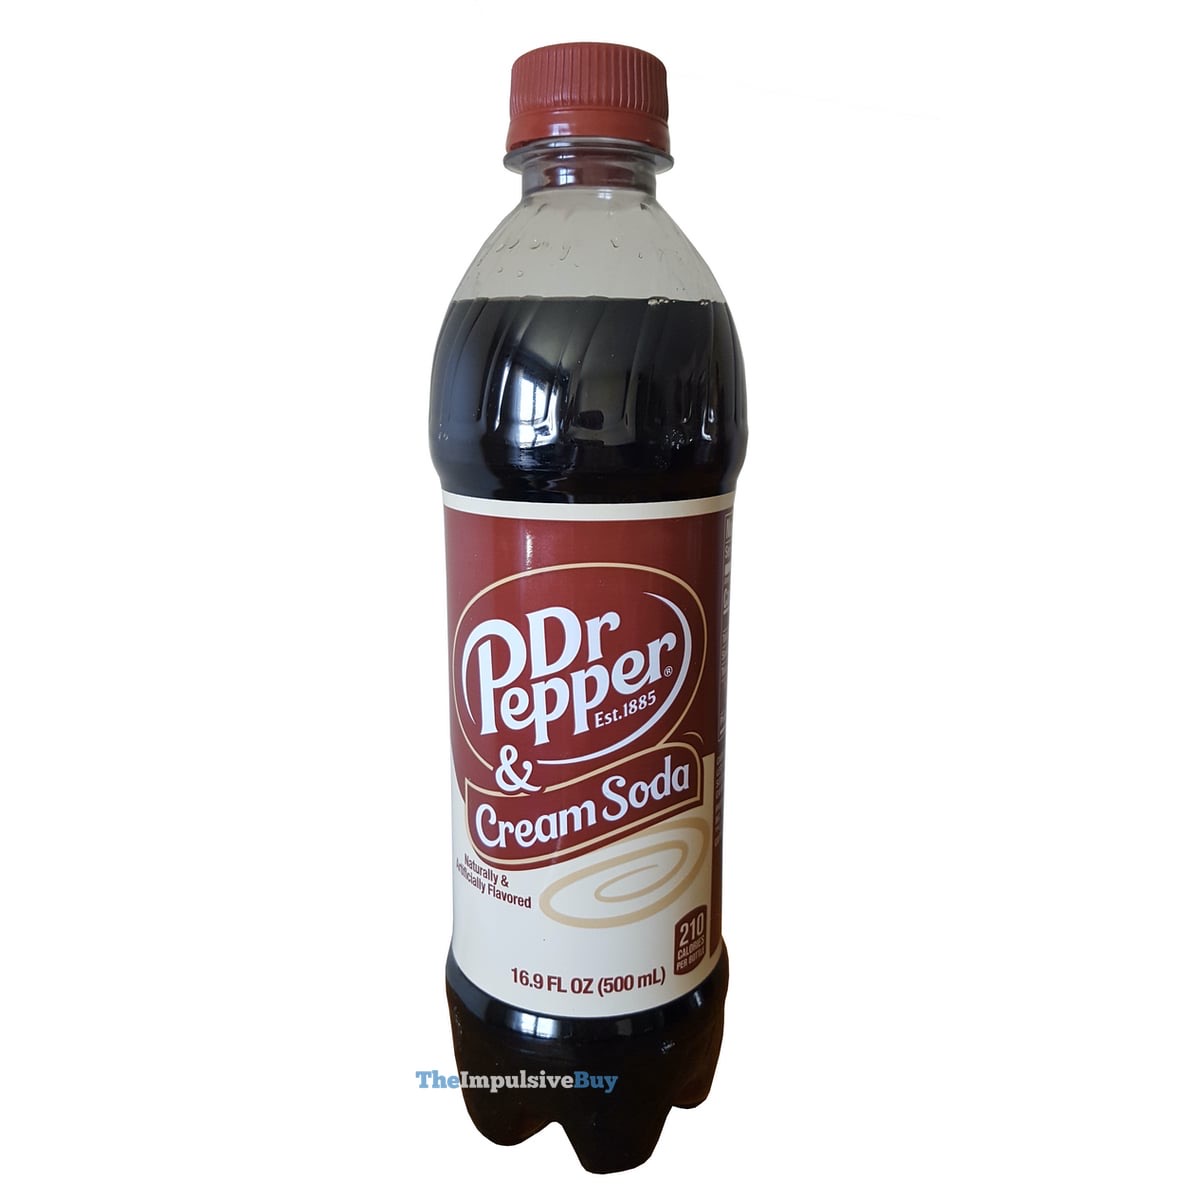 Pepper cream. Доктор Пеппер крем сода. Доктор Пеппер Зеро. Dr Pepper Cream Soda Zero. Доктор Пеппер Зеро углеводы.